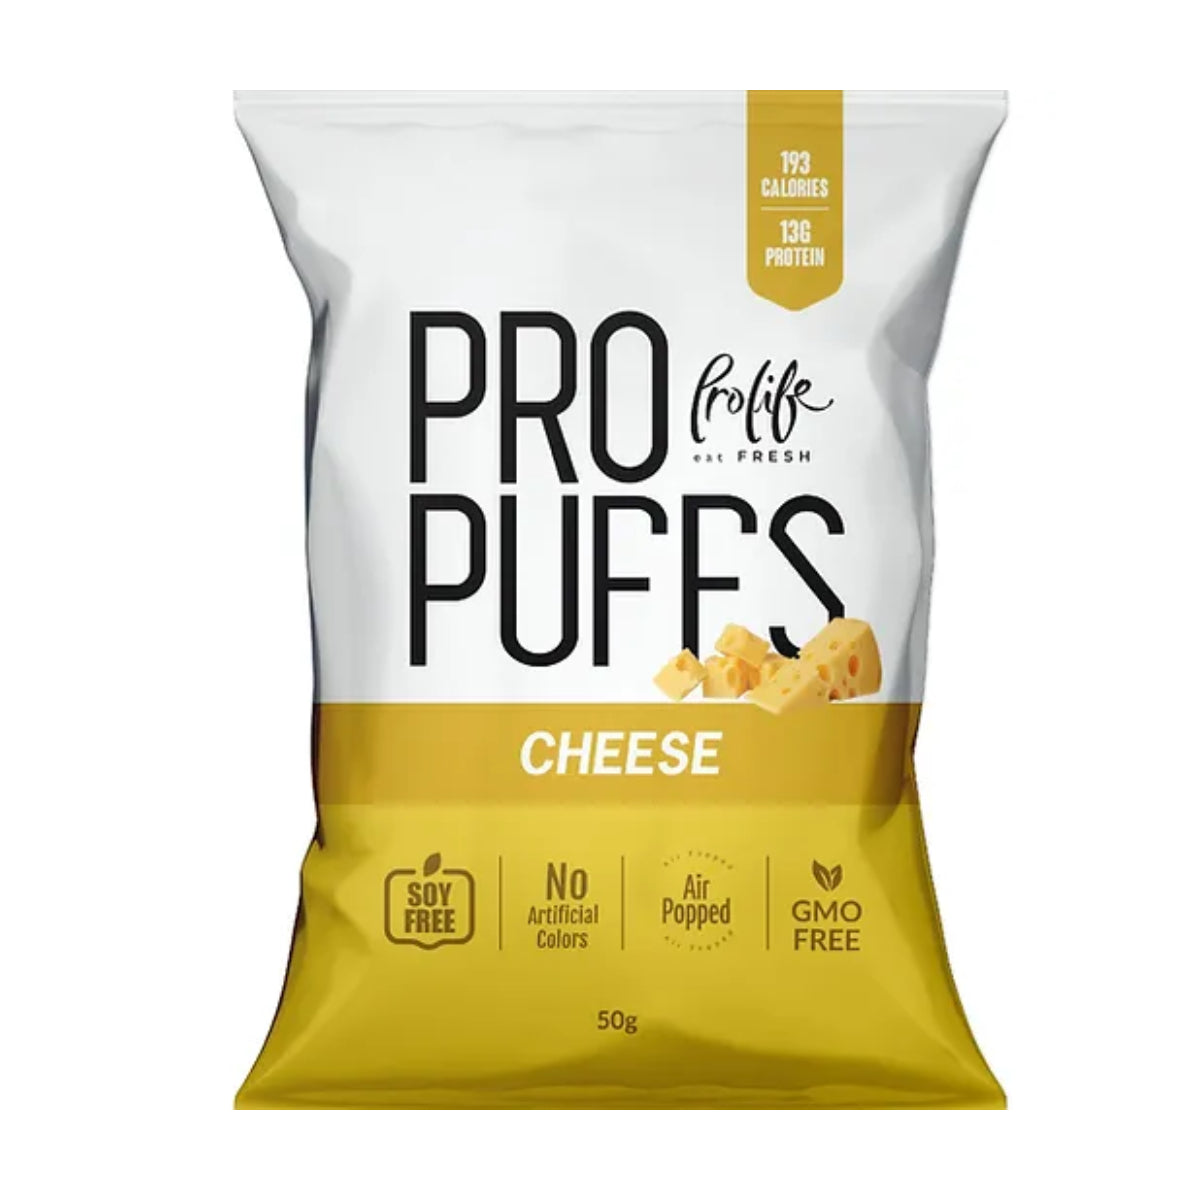 Pro Life Pro puffs 50g (20 Pieces Per Box)